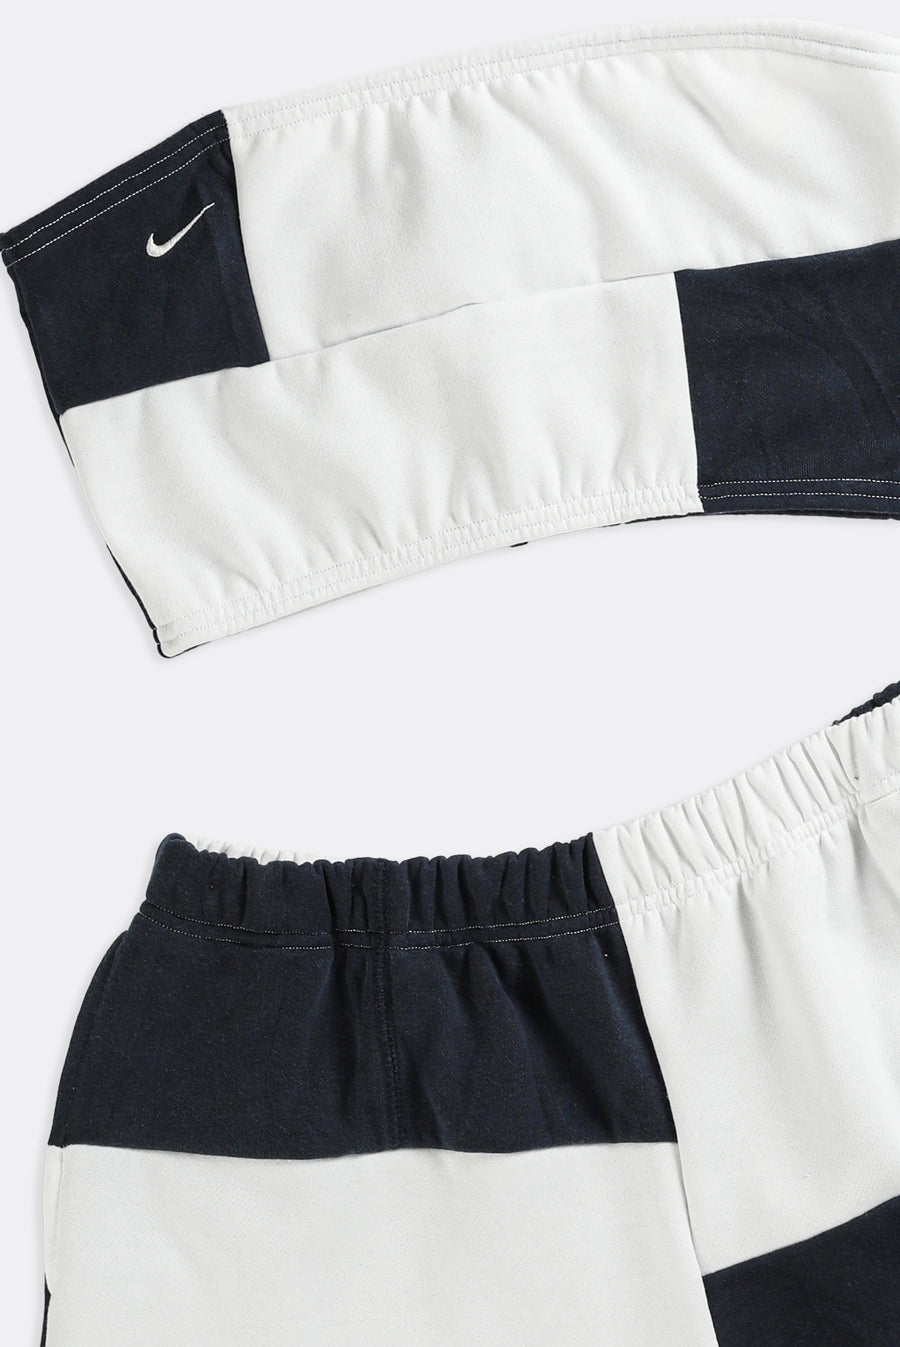 Rework Nike Patchwork Sweatshorts Set - XS, S, M, L, XL – Frankie Collective